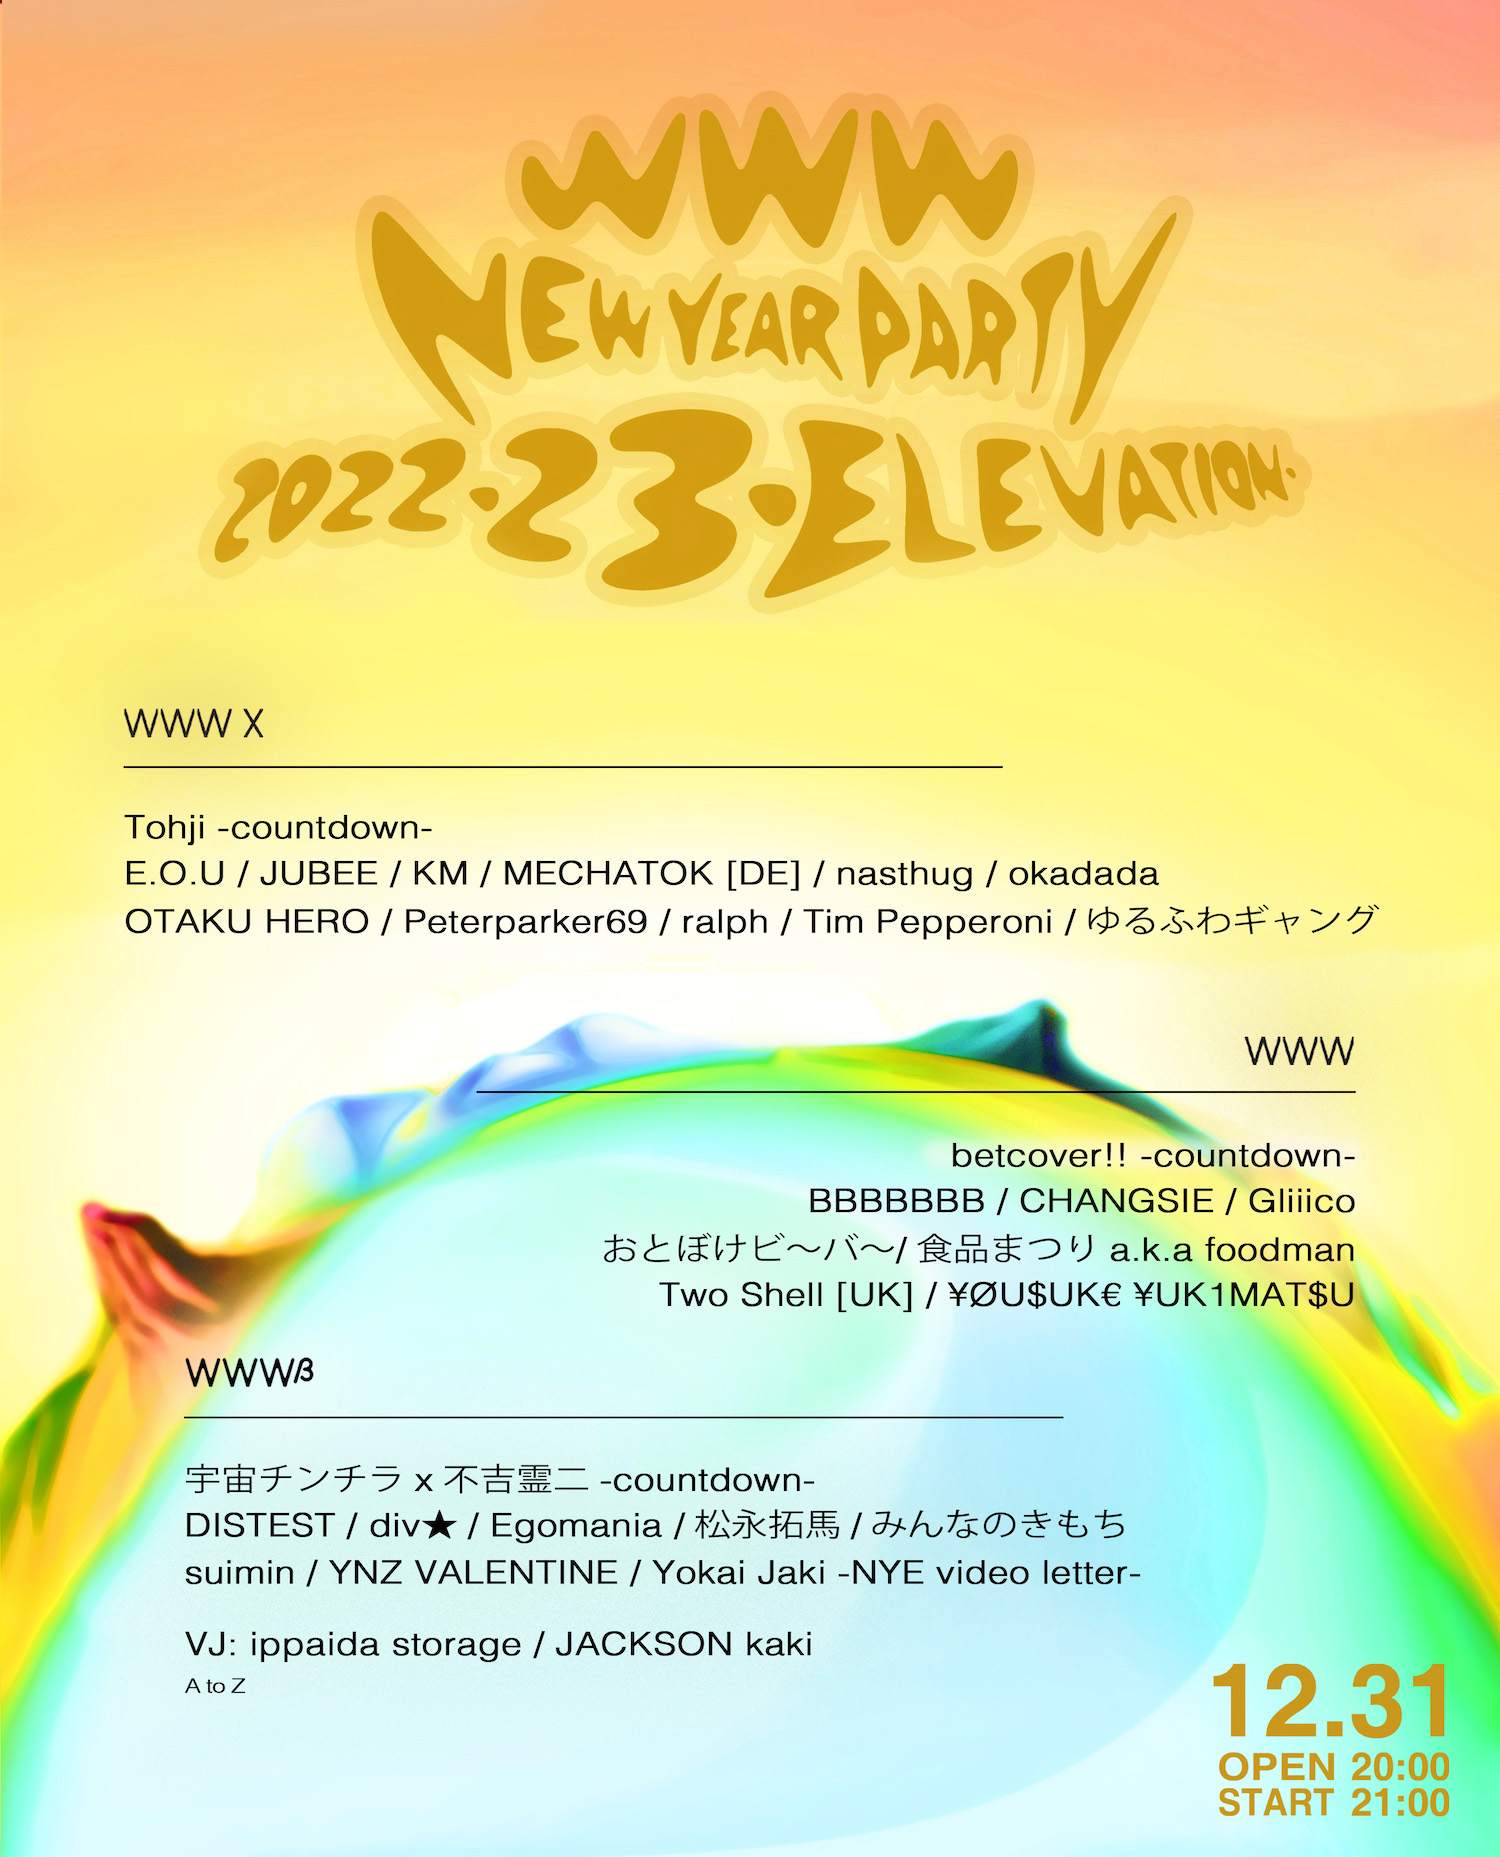 WWW New Year party 2022-23 -elevation- - Página frontal